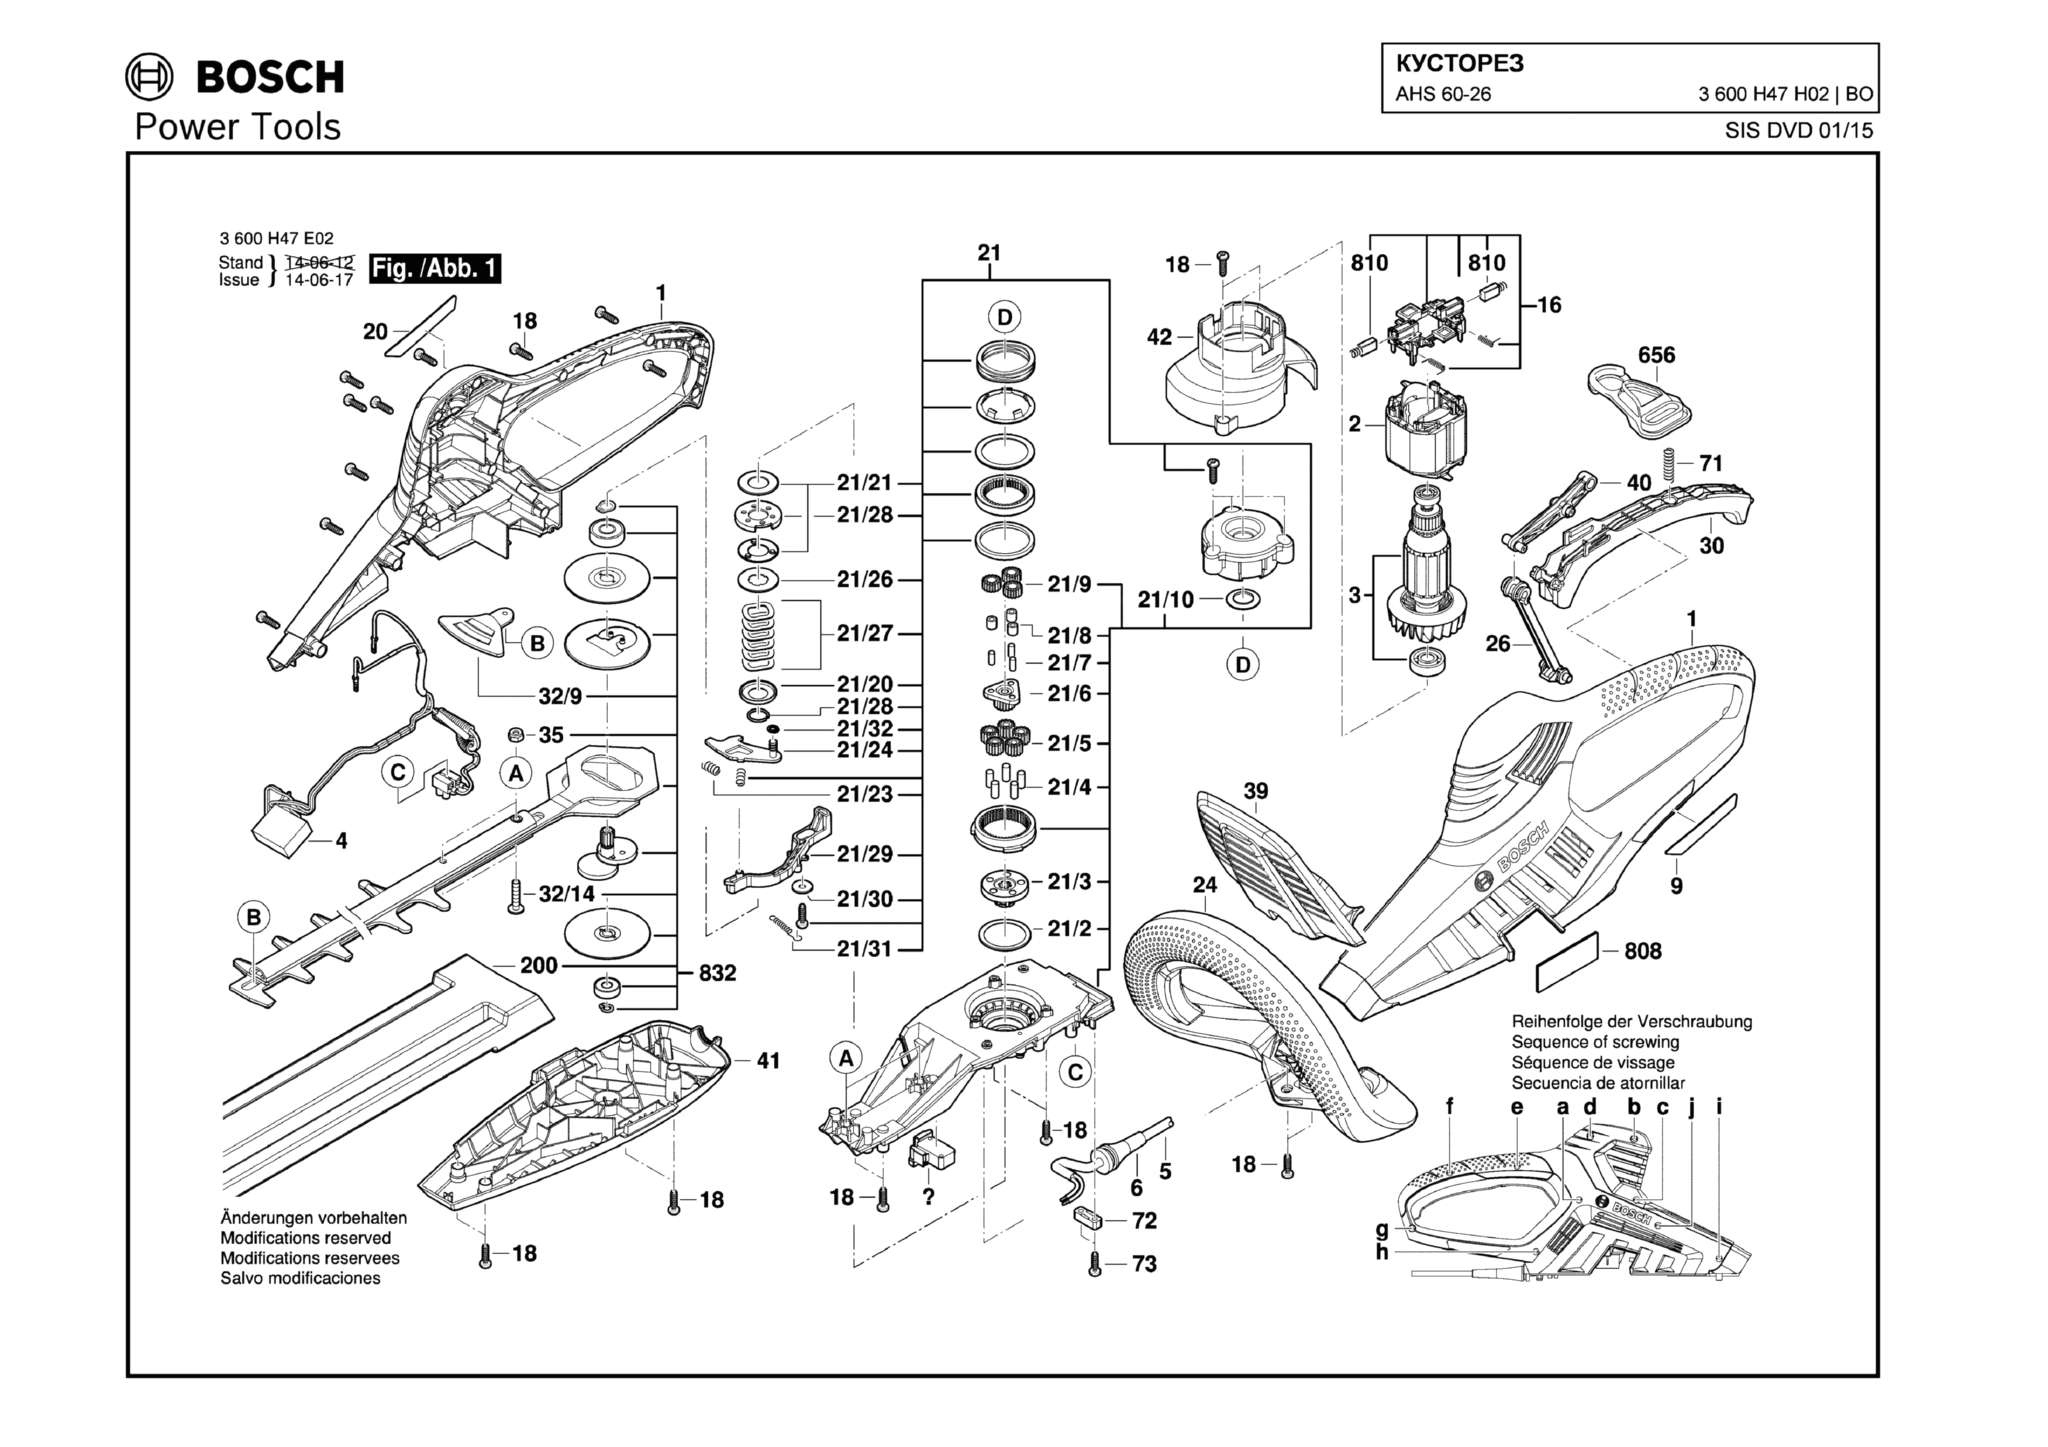 Запчасти, схема и деталировка Bosch AHS 60-26 (ТИП 3600H47H02)